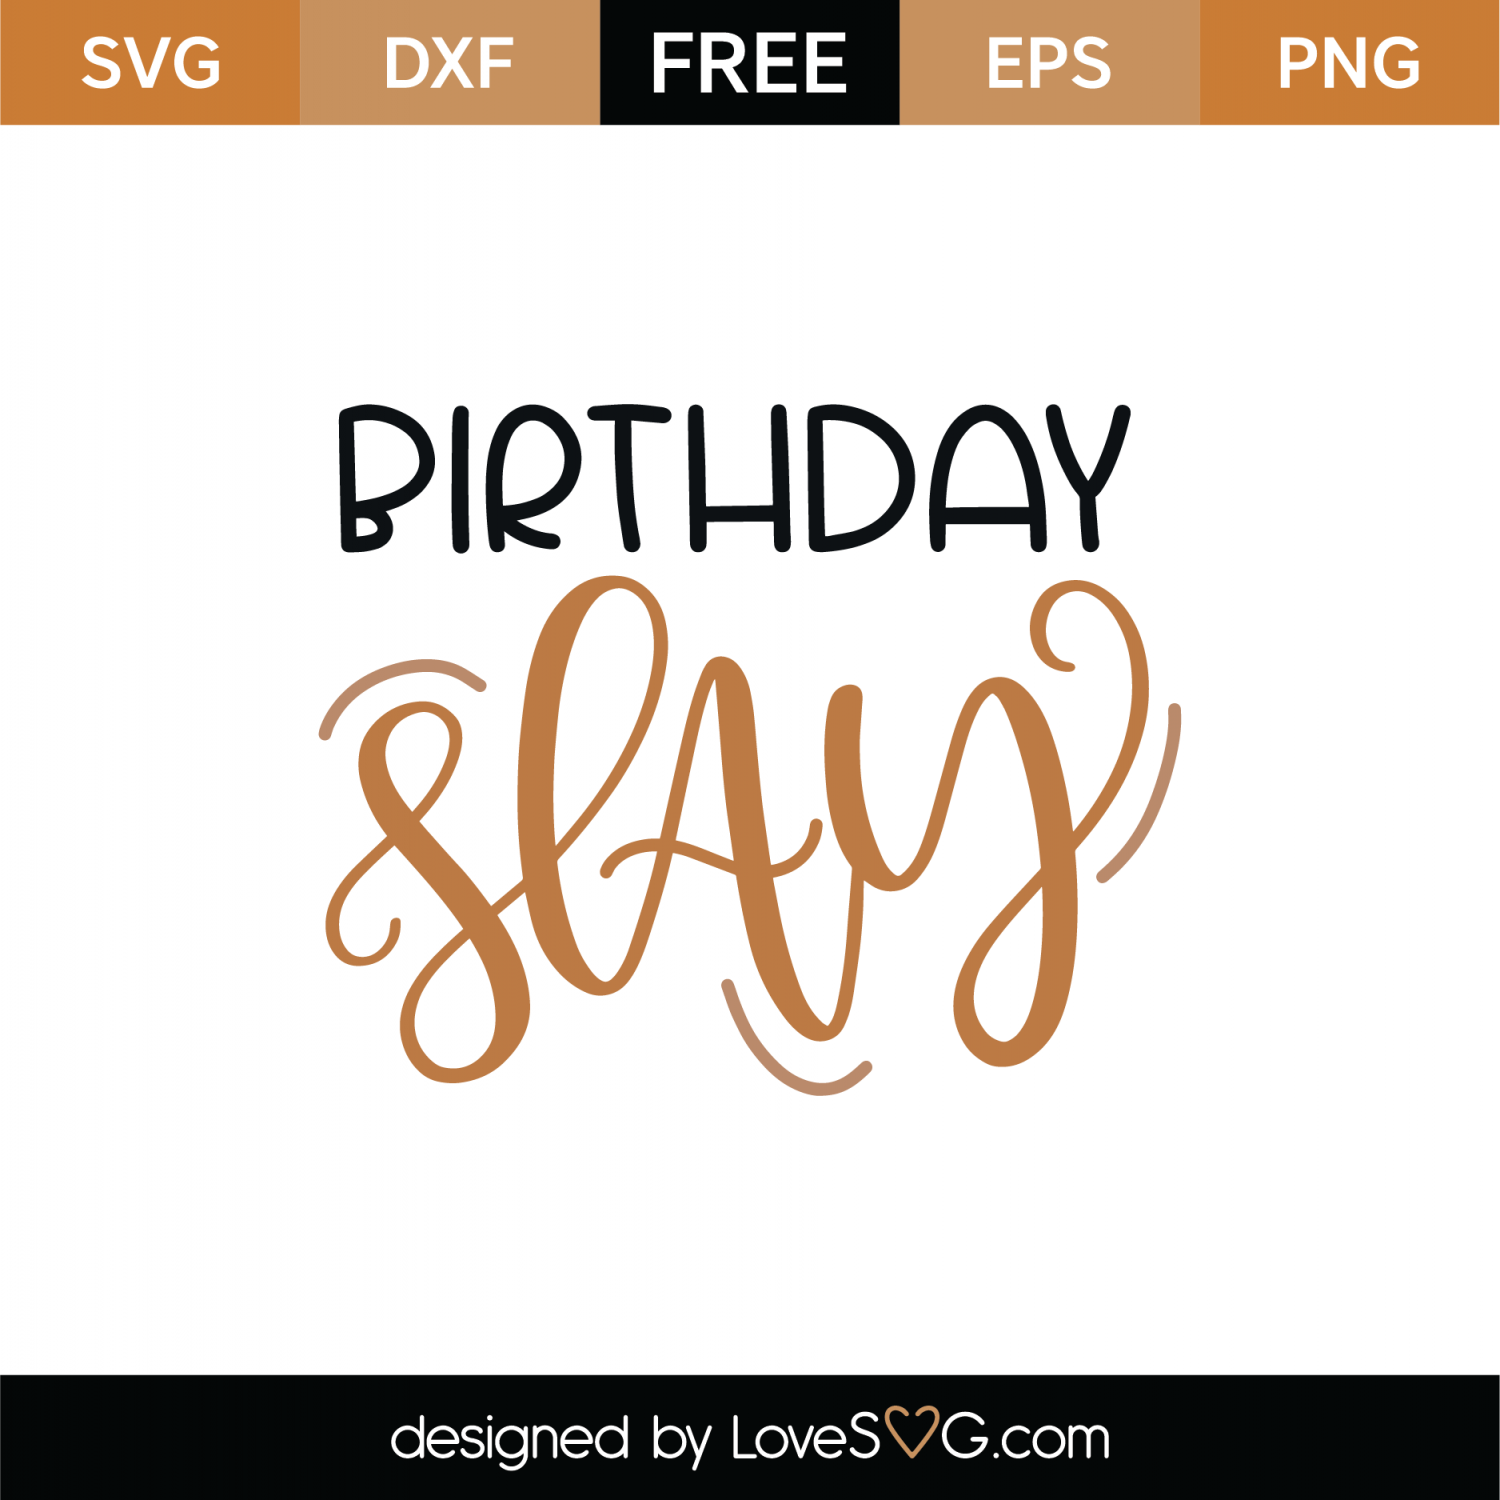 Download Free Birthday Slay SVG Cut File | Lovesvg.com